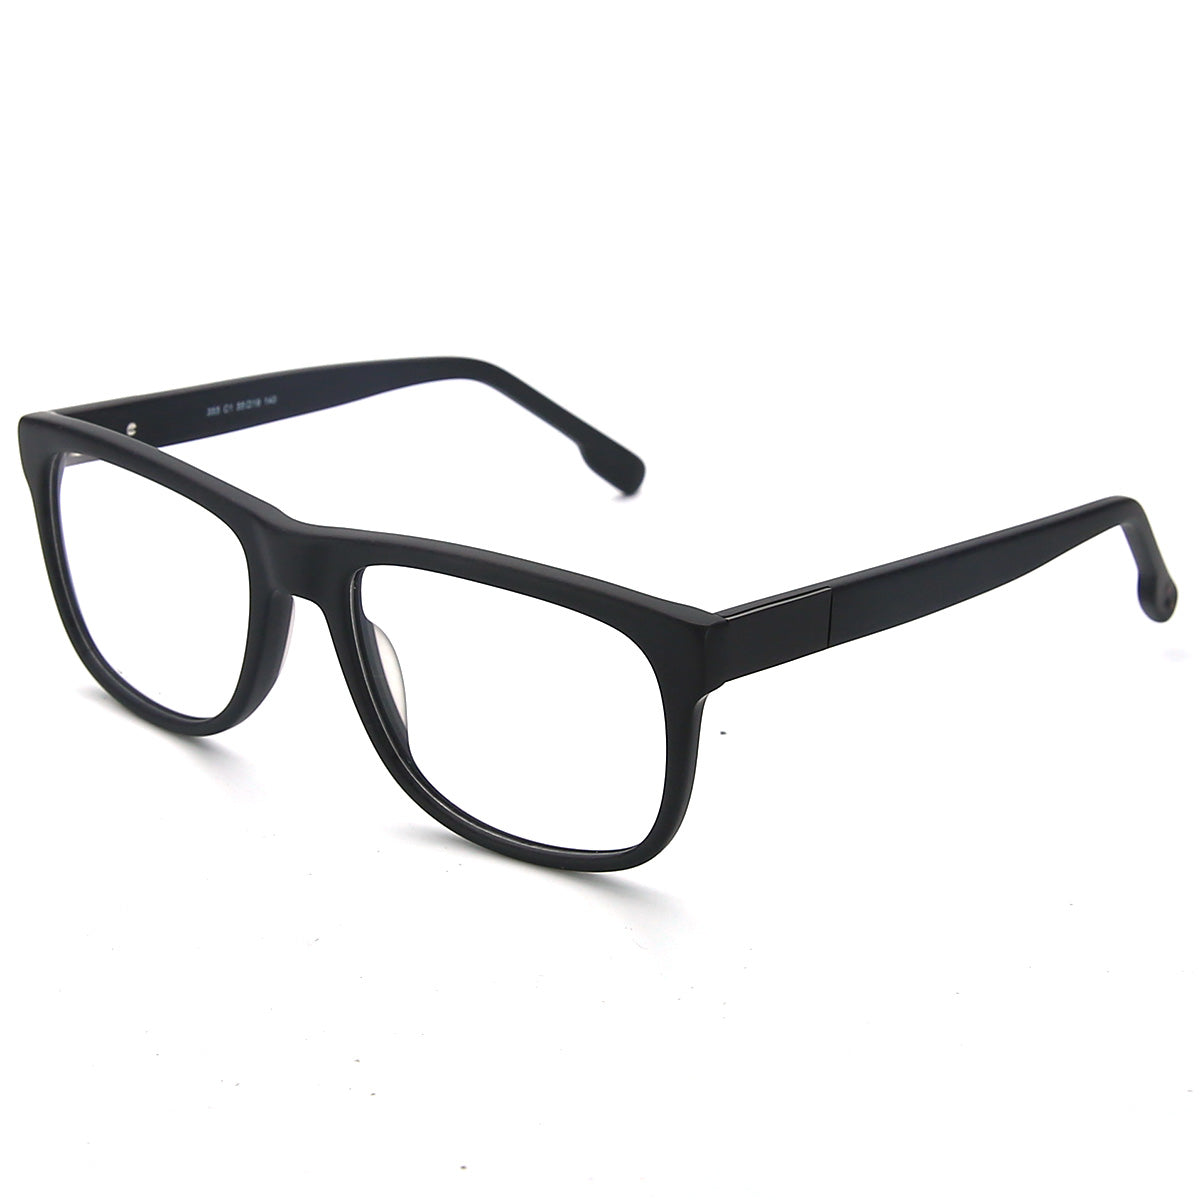 Sunglasses,specsmart, spec smart, glasses, eye glasses glasses frames, where to get glasses in lagos, eye treatment, wellness health care group, calypso Ainsley